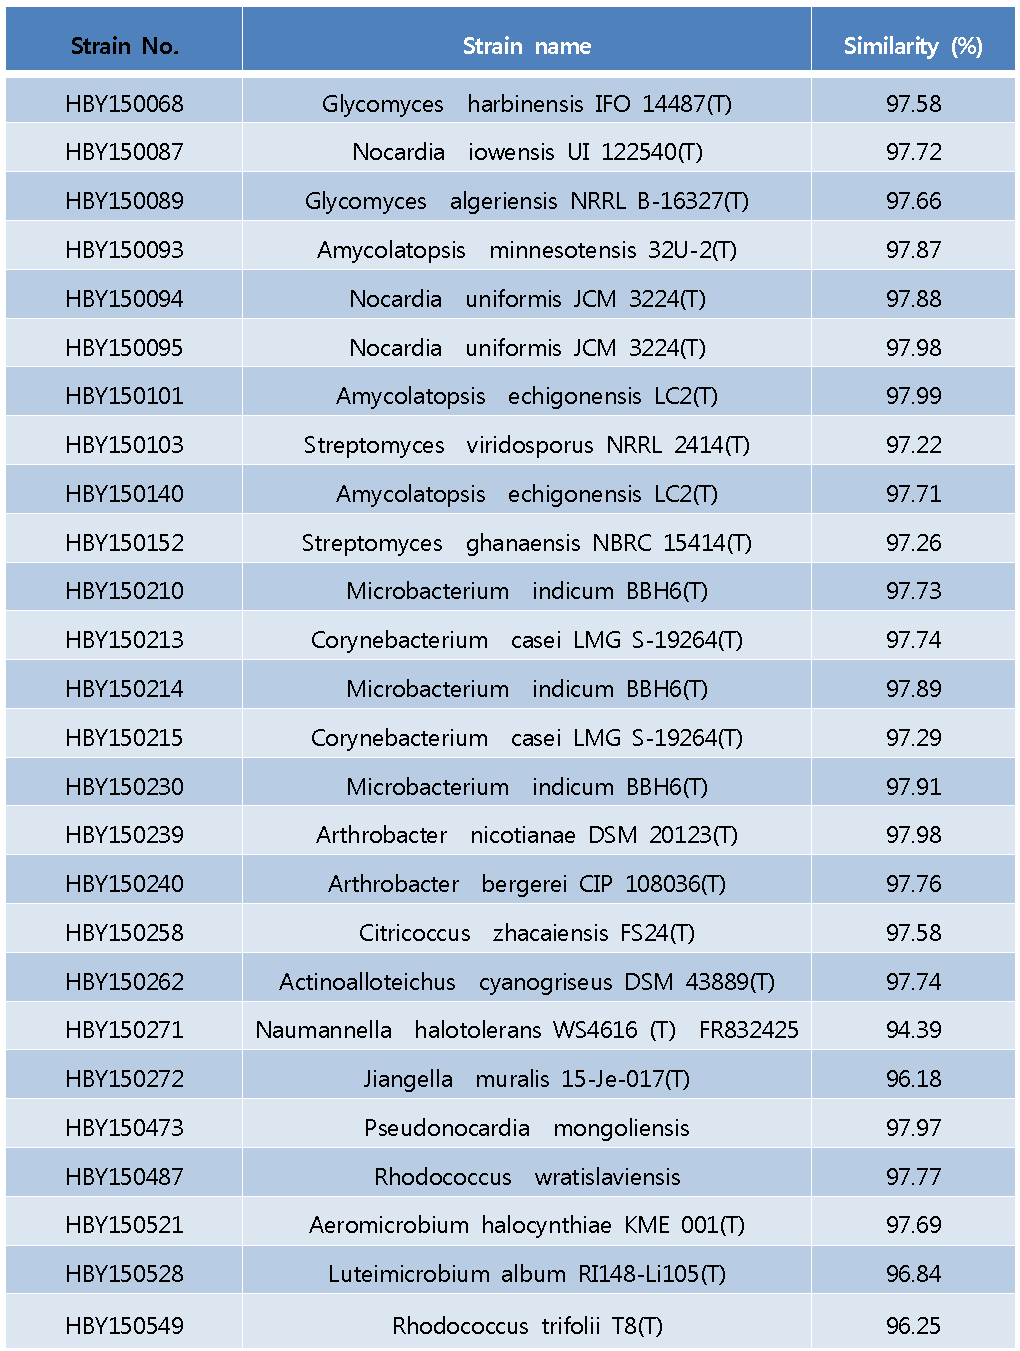 16S rRNA gene sequencing 결과와 신종 후보 균주 목록